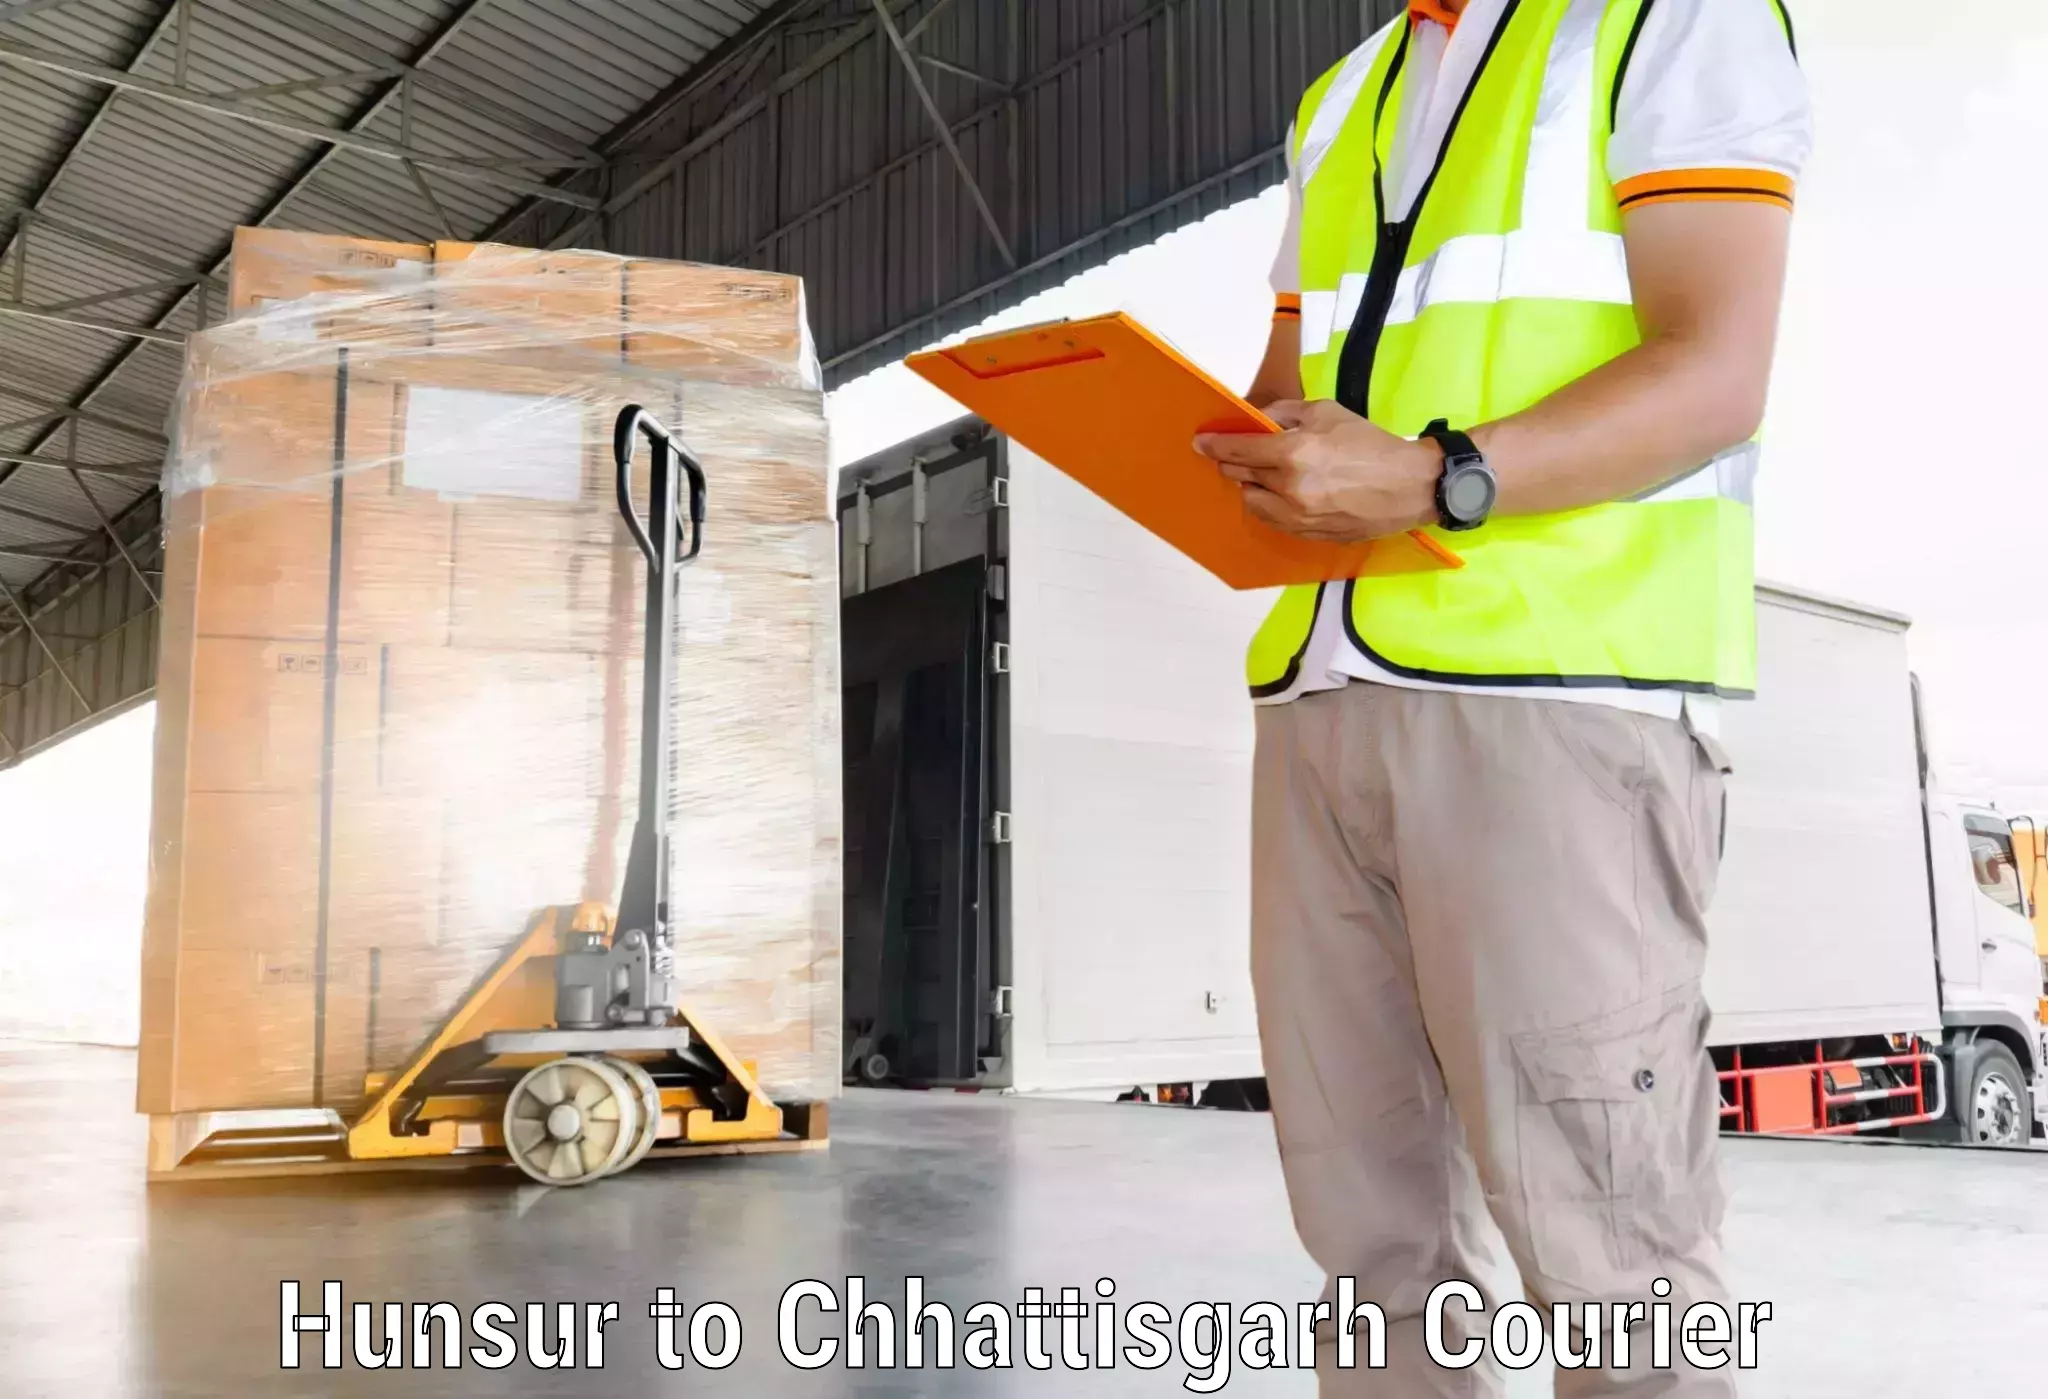 Courier service innovation Hunsur to Patna Chhattisgarh